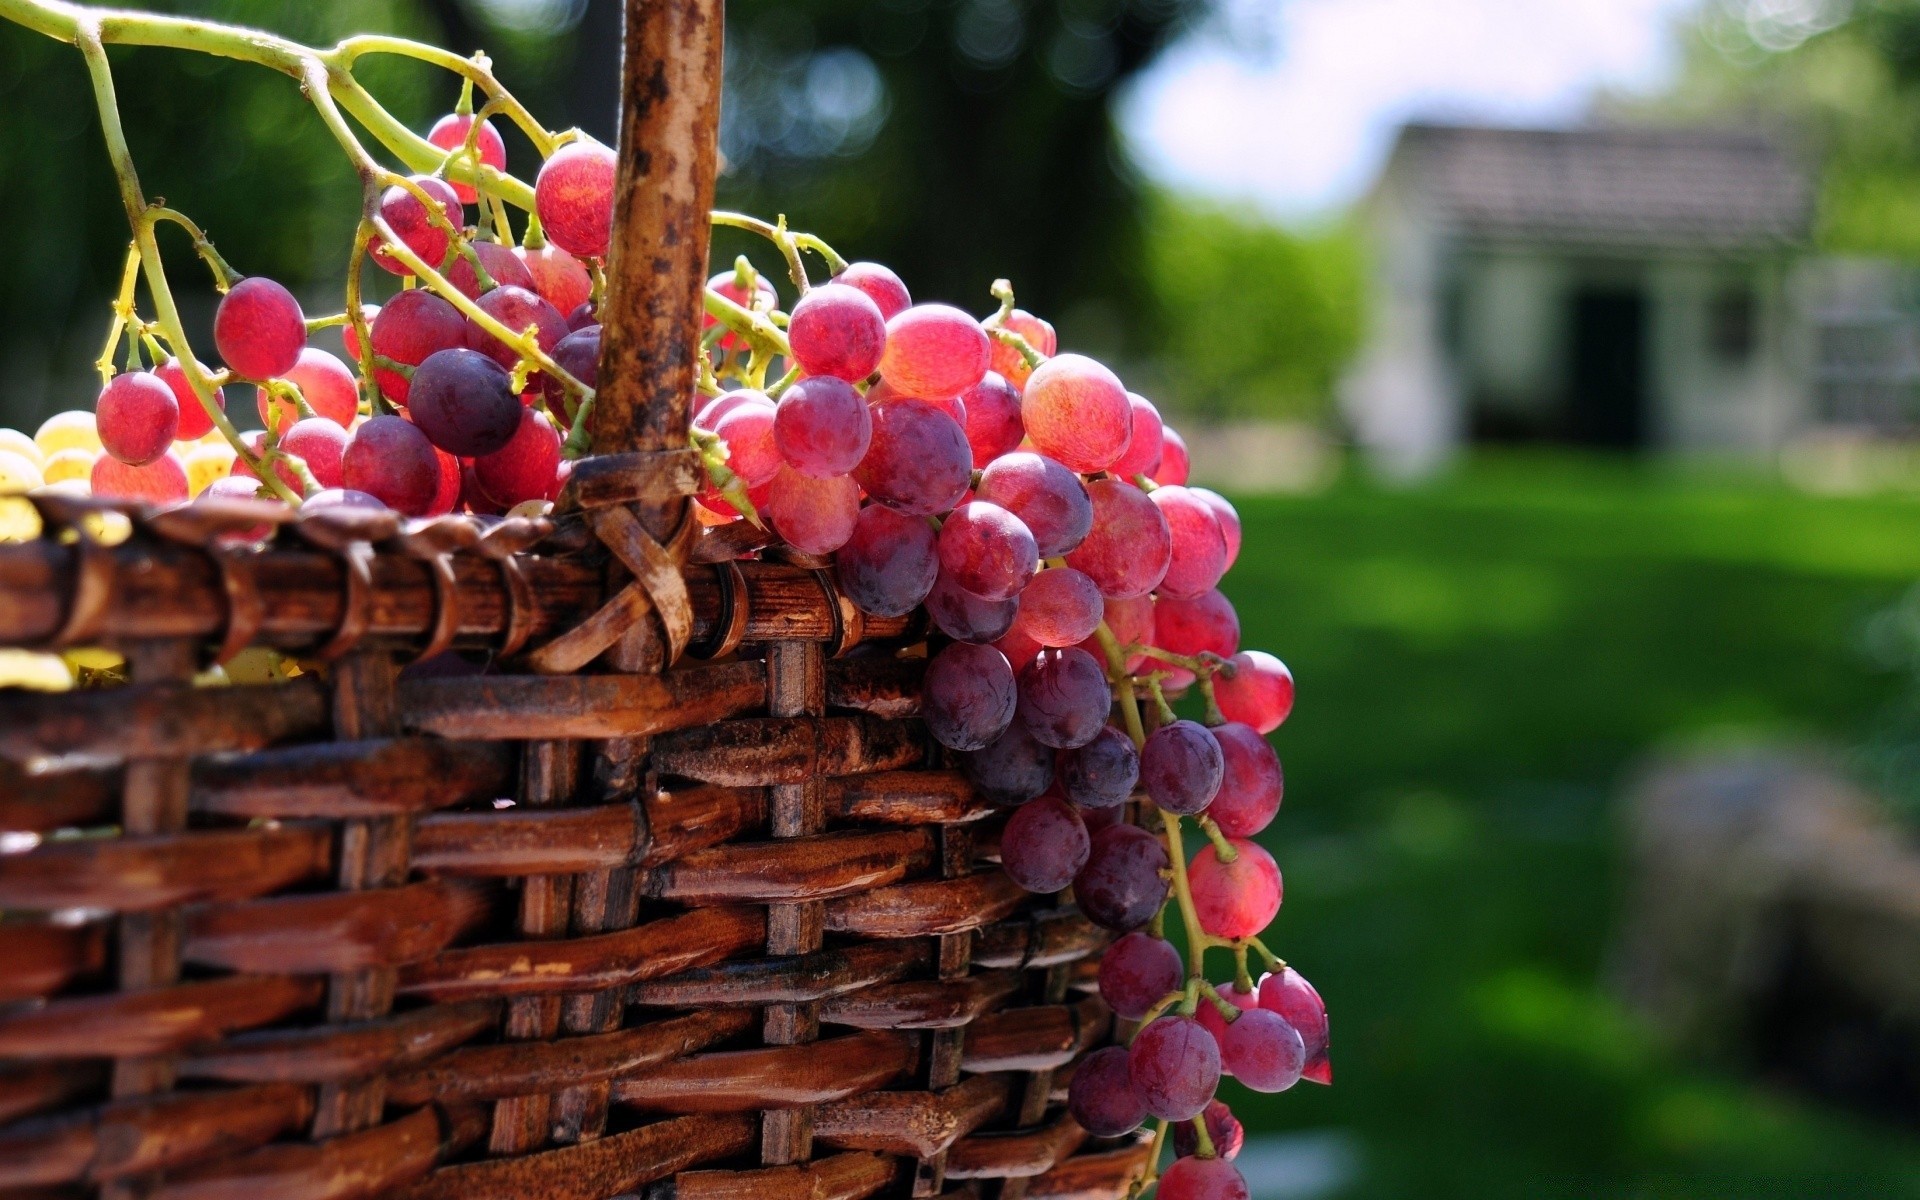 fruit food vine garden grape grow nature basket berry bunch winery wine pasture confection cluster summer juicy color vineyard